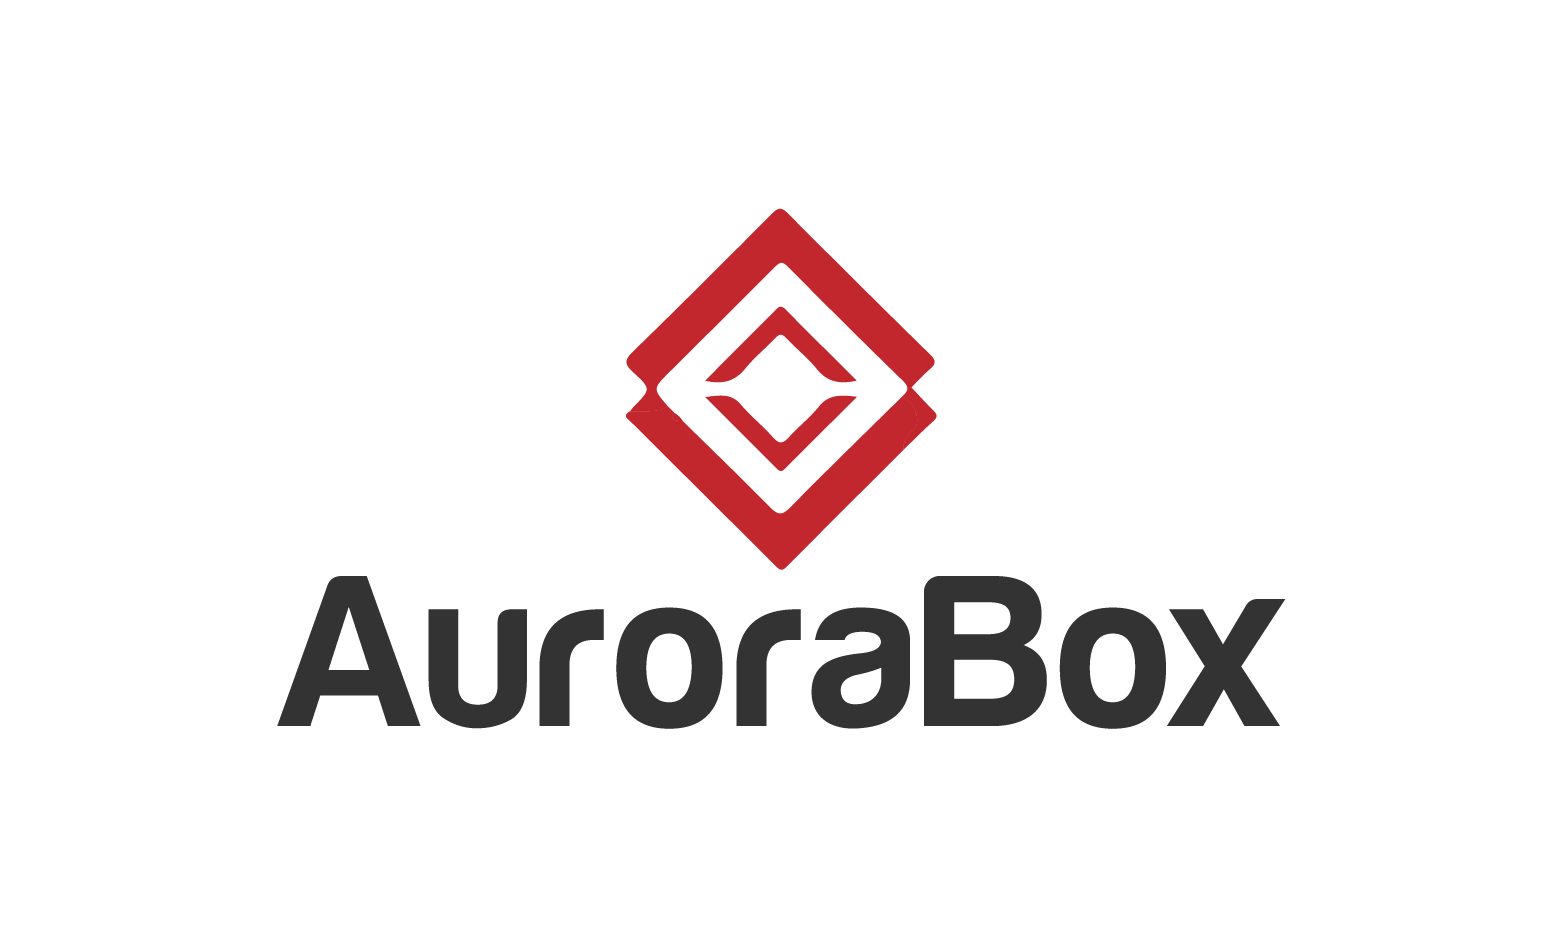 AuroraBox.com - Creative brandable domain for sale